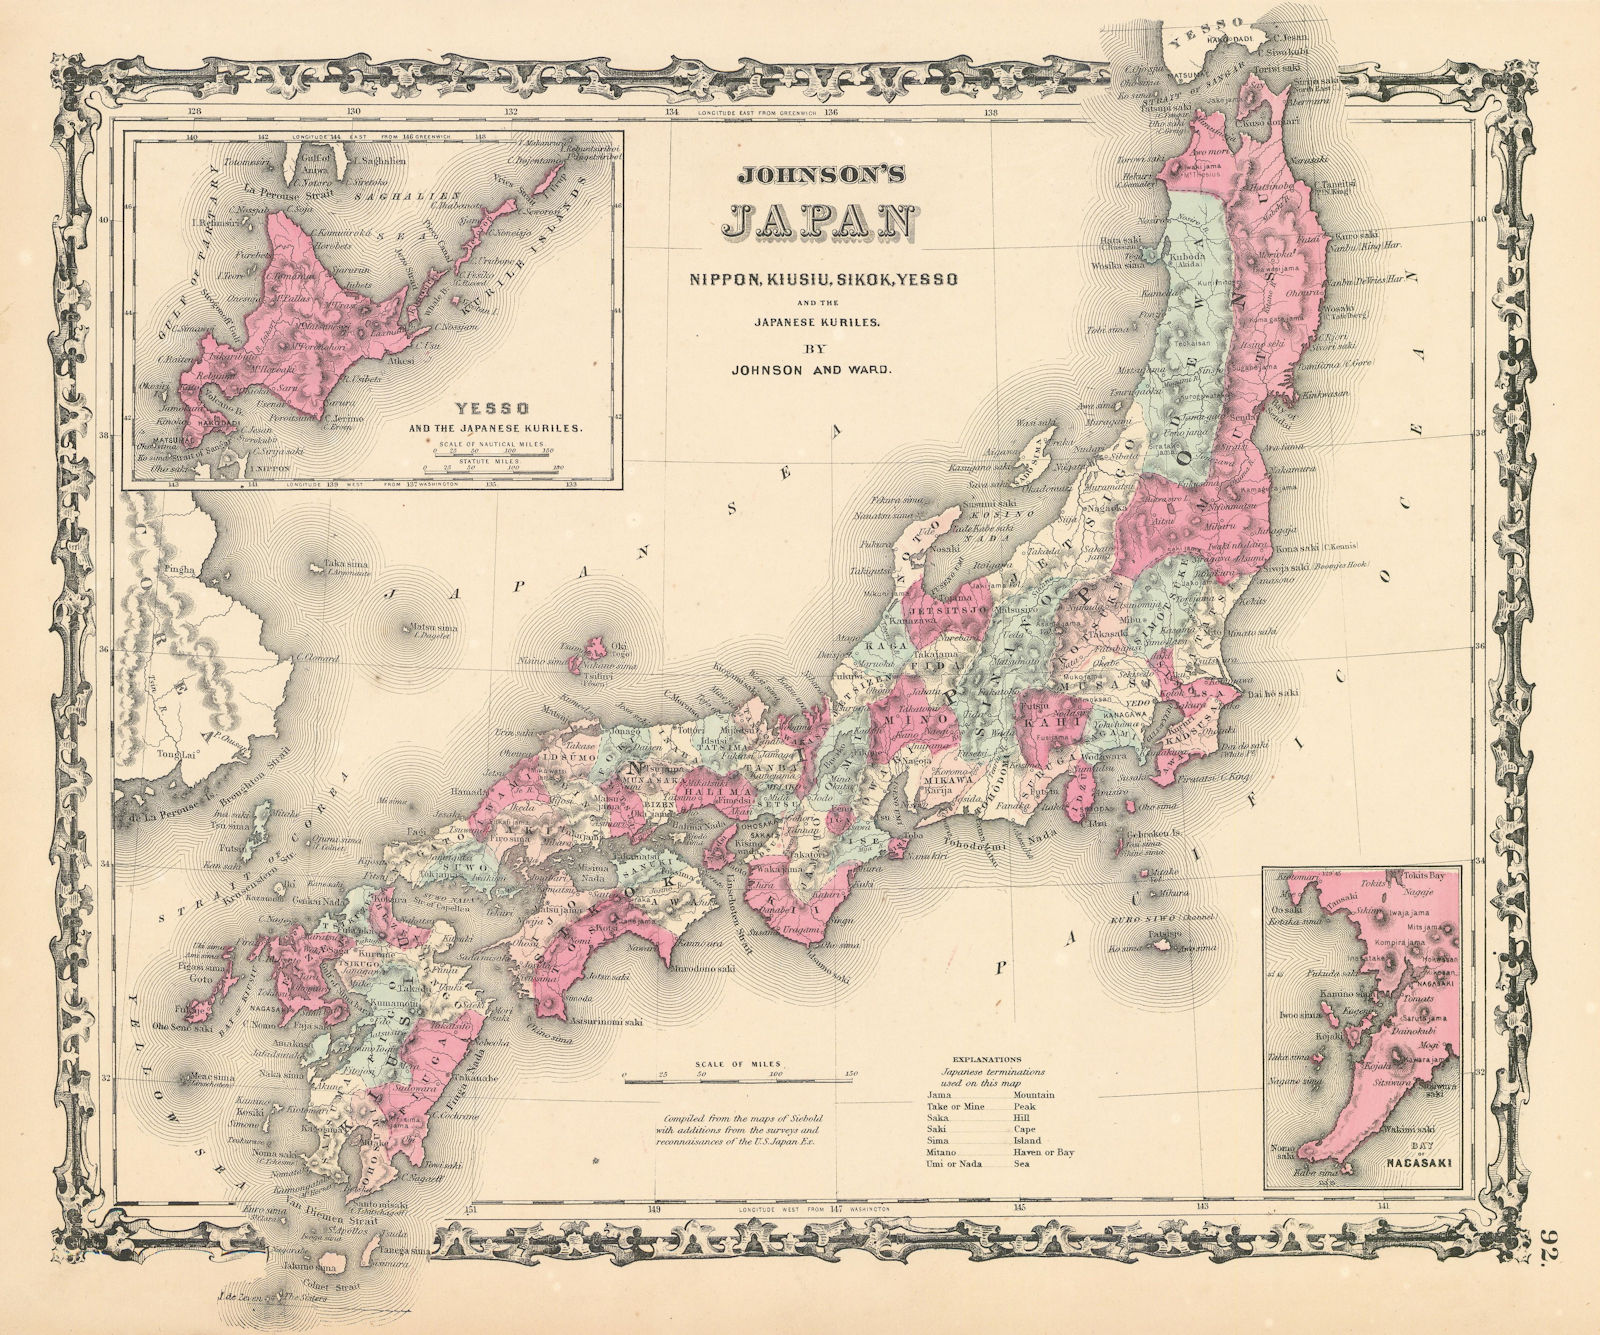 Johnson's Japan, Nippon, Kiusiu, Sikok, Yesso & Kuriles. Nagasaki Bay 1862 map